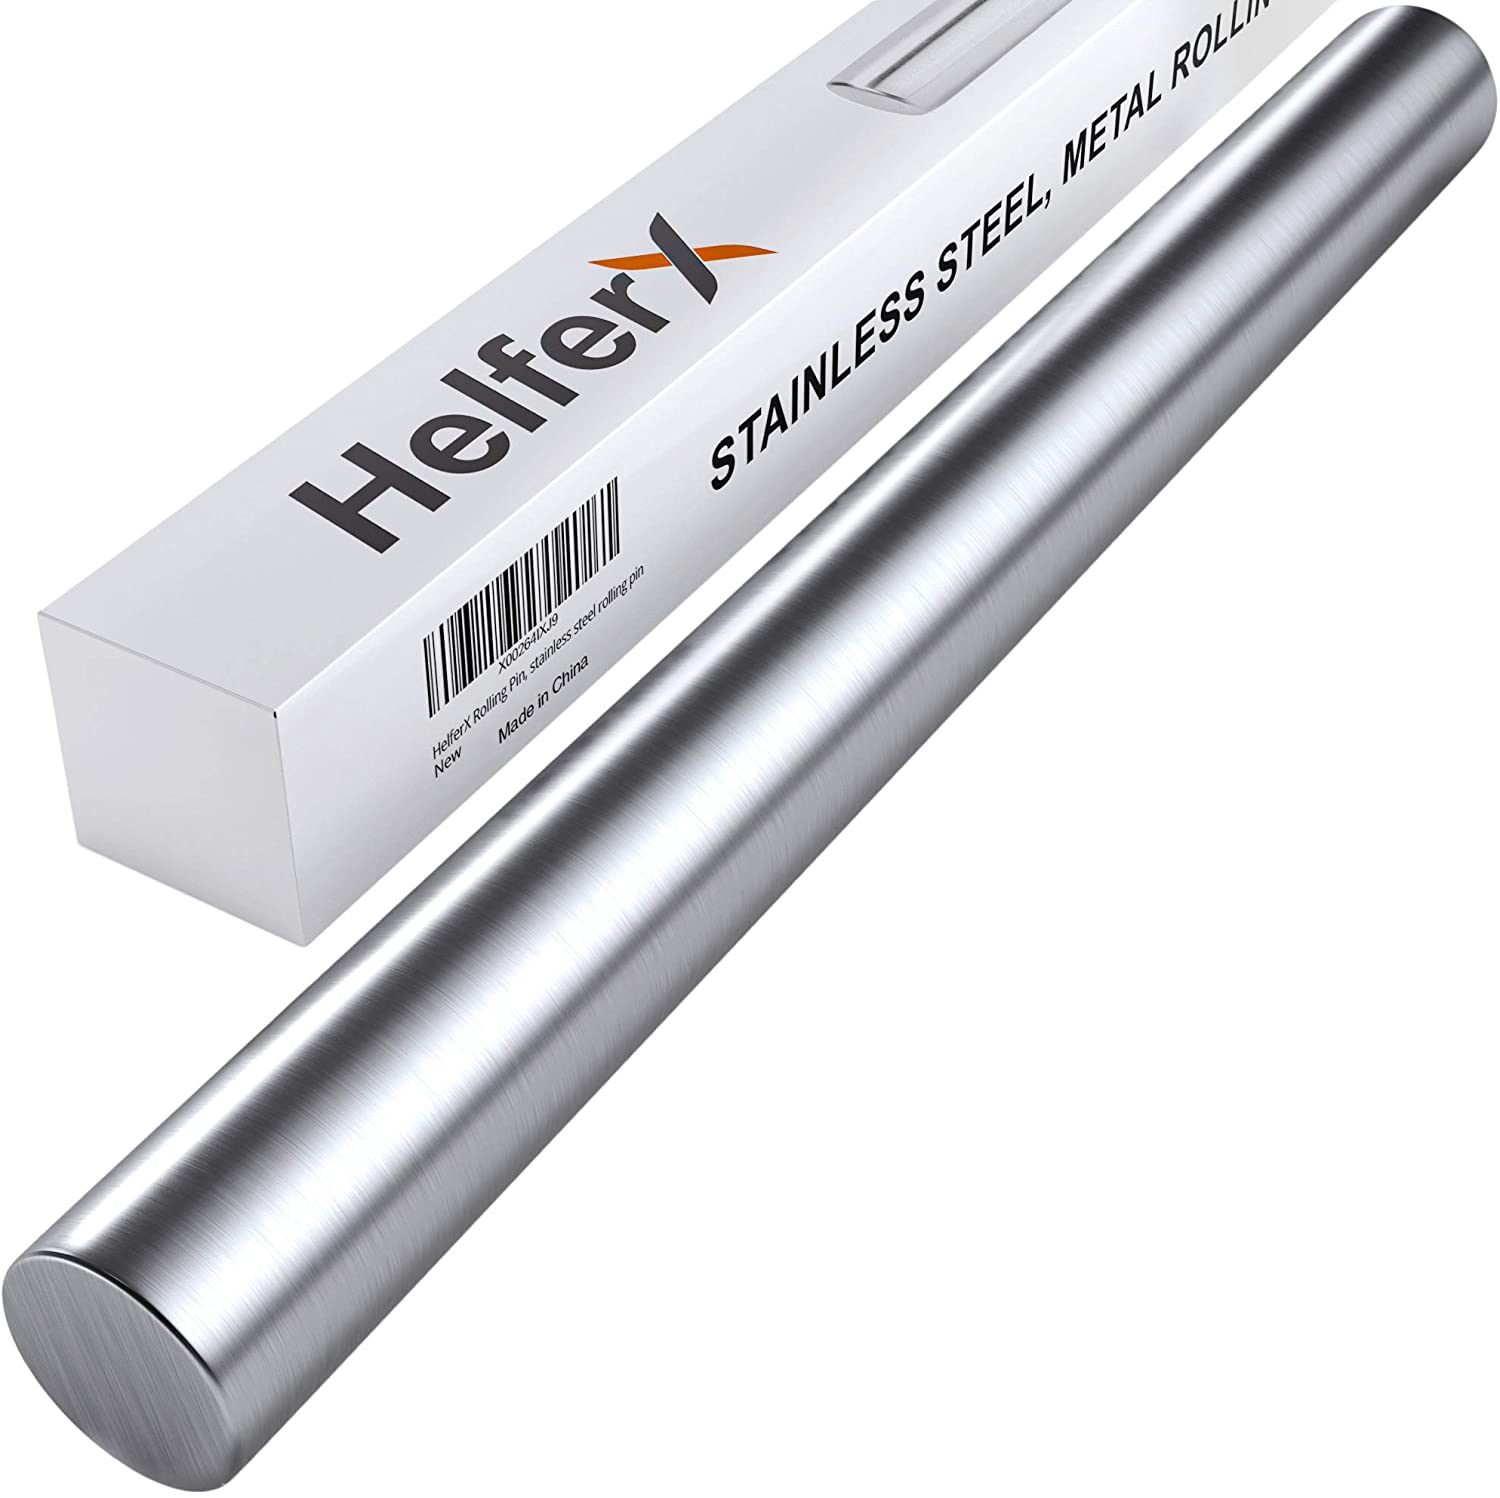 HelferX Professional Stainless Steel Rolling Pin